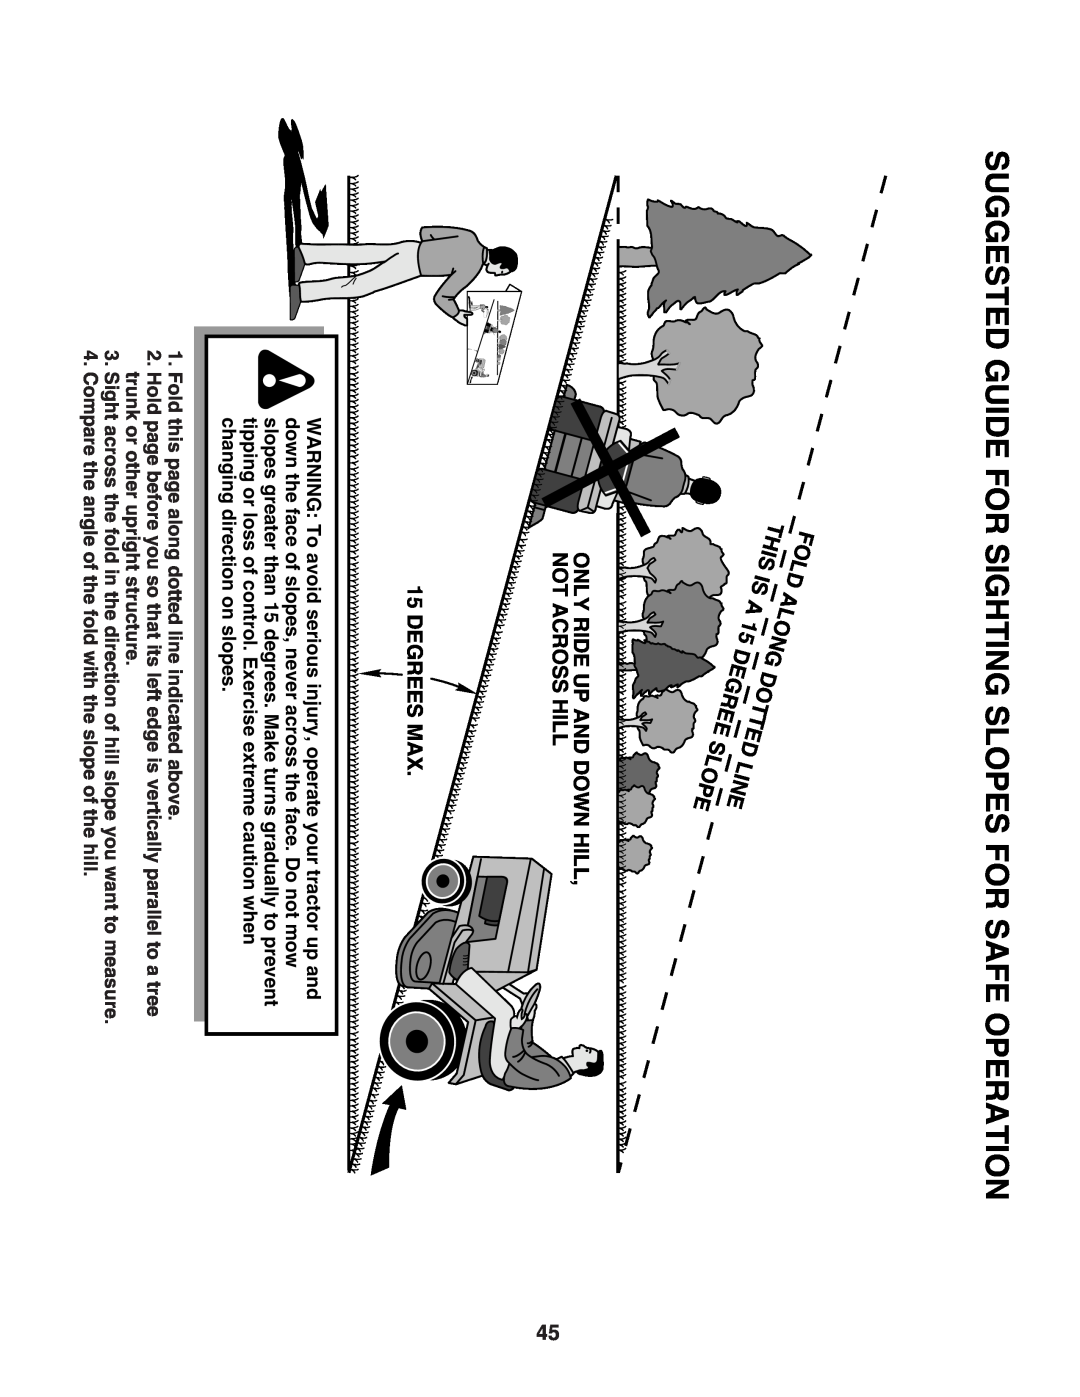 Husqvarna 2754 GLS manual Suggested Guide For Sighting Slopes For Safe Operation 